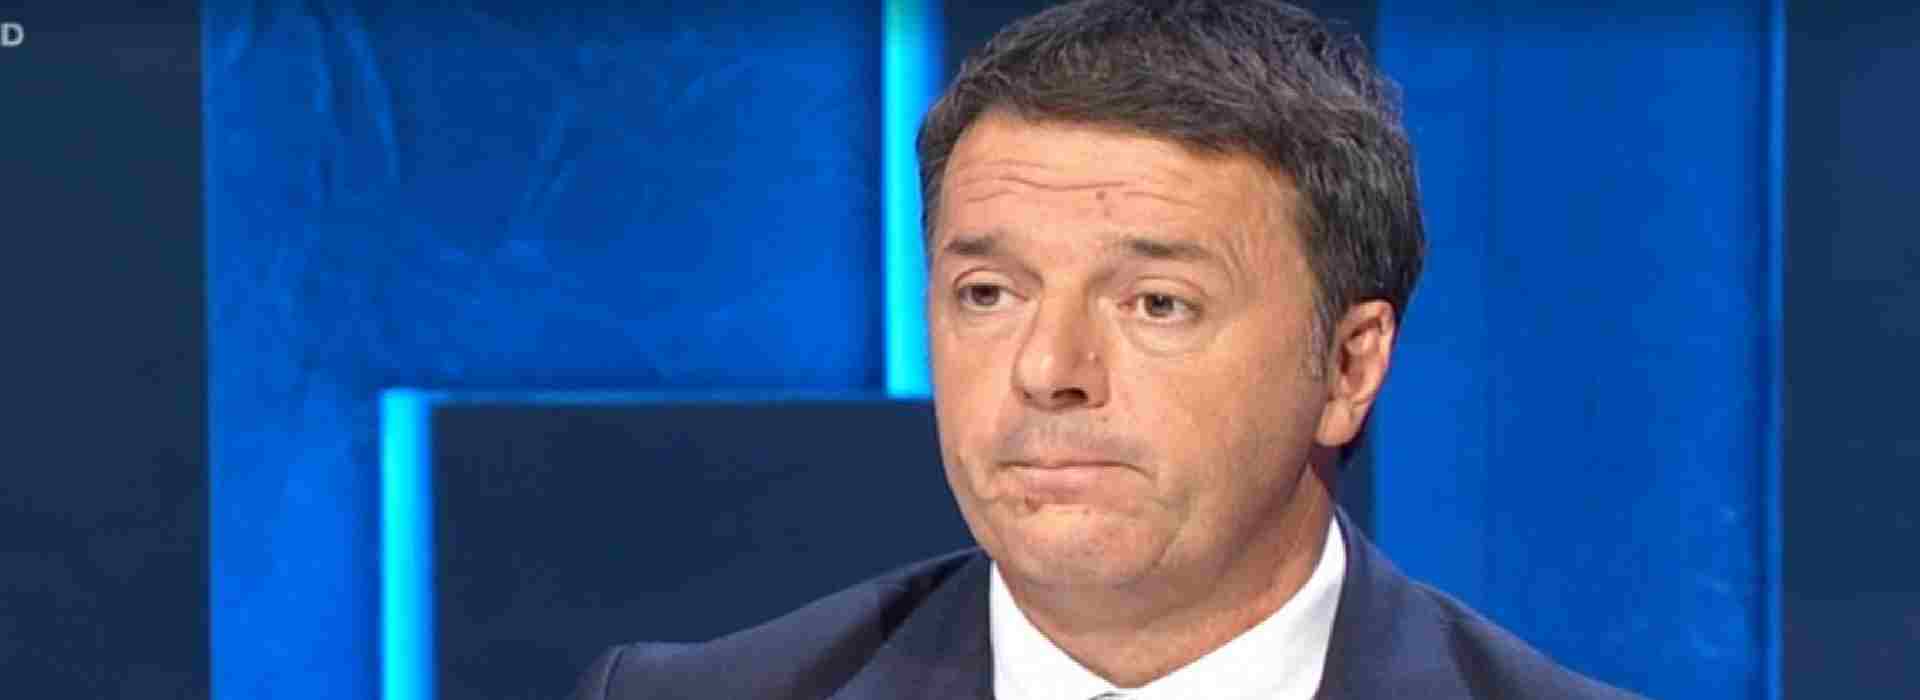 Matteo Renzi ha un problema. O forse due.